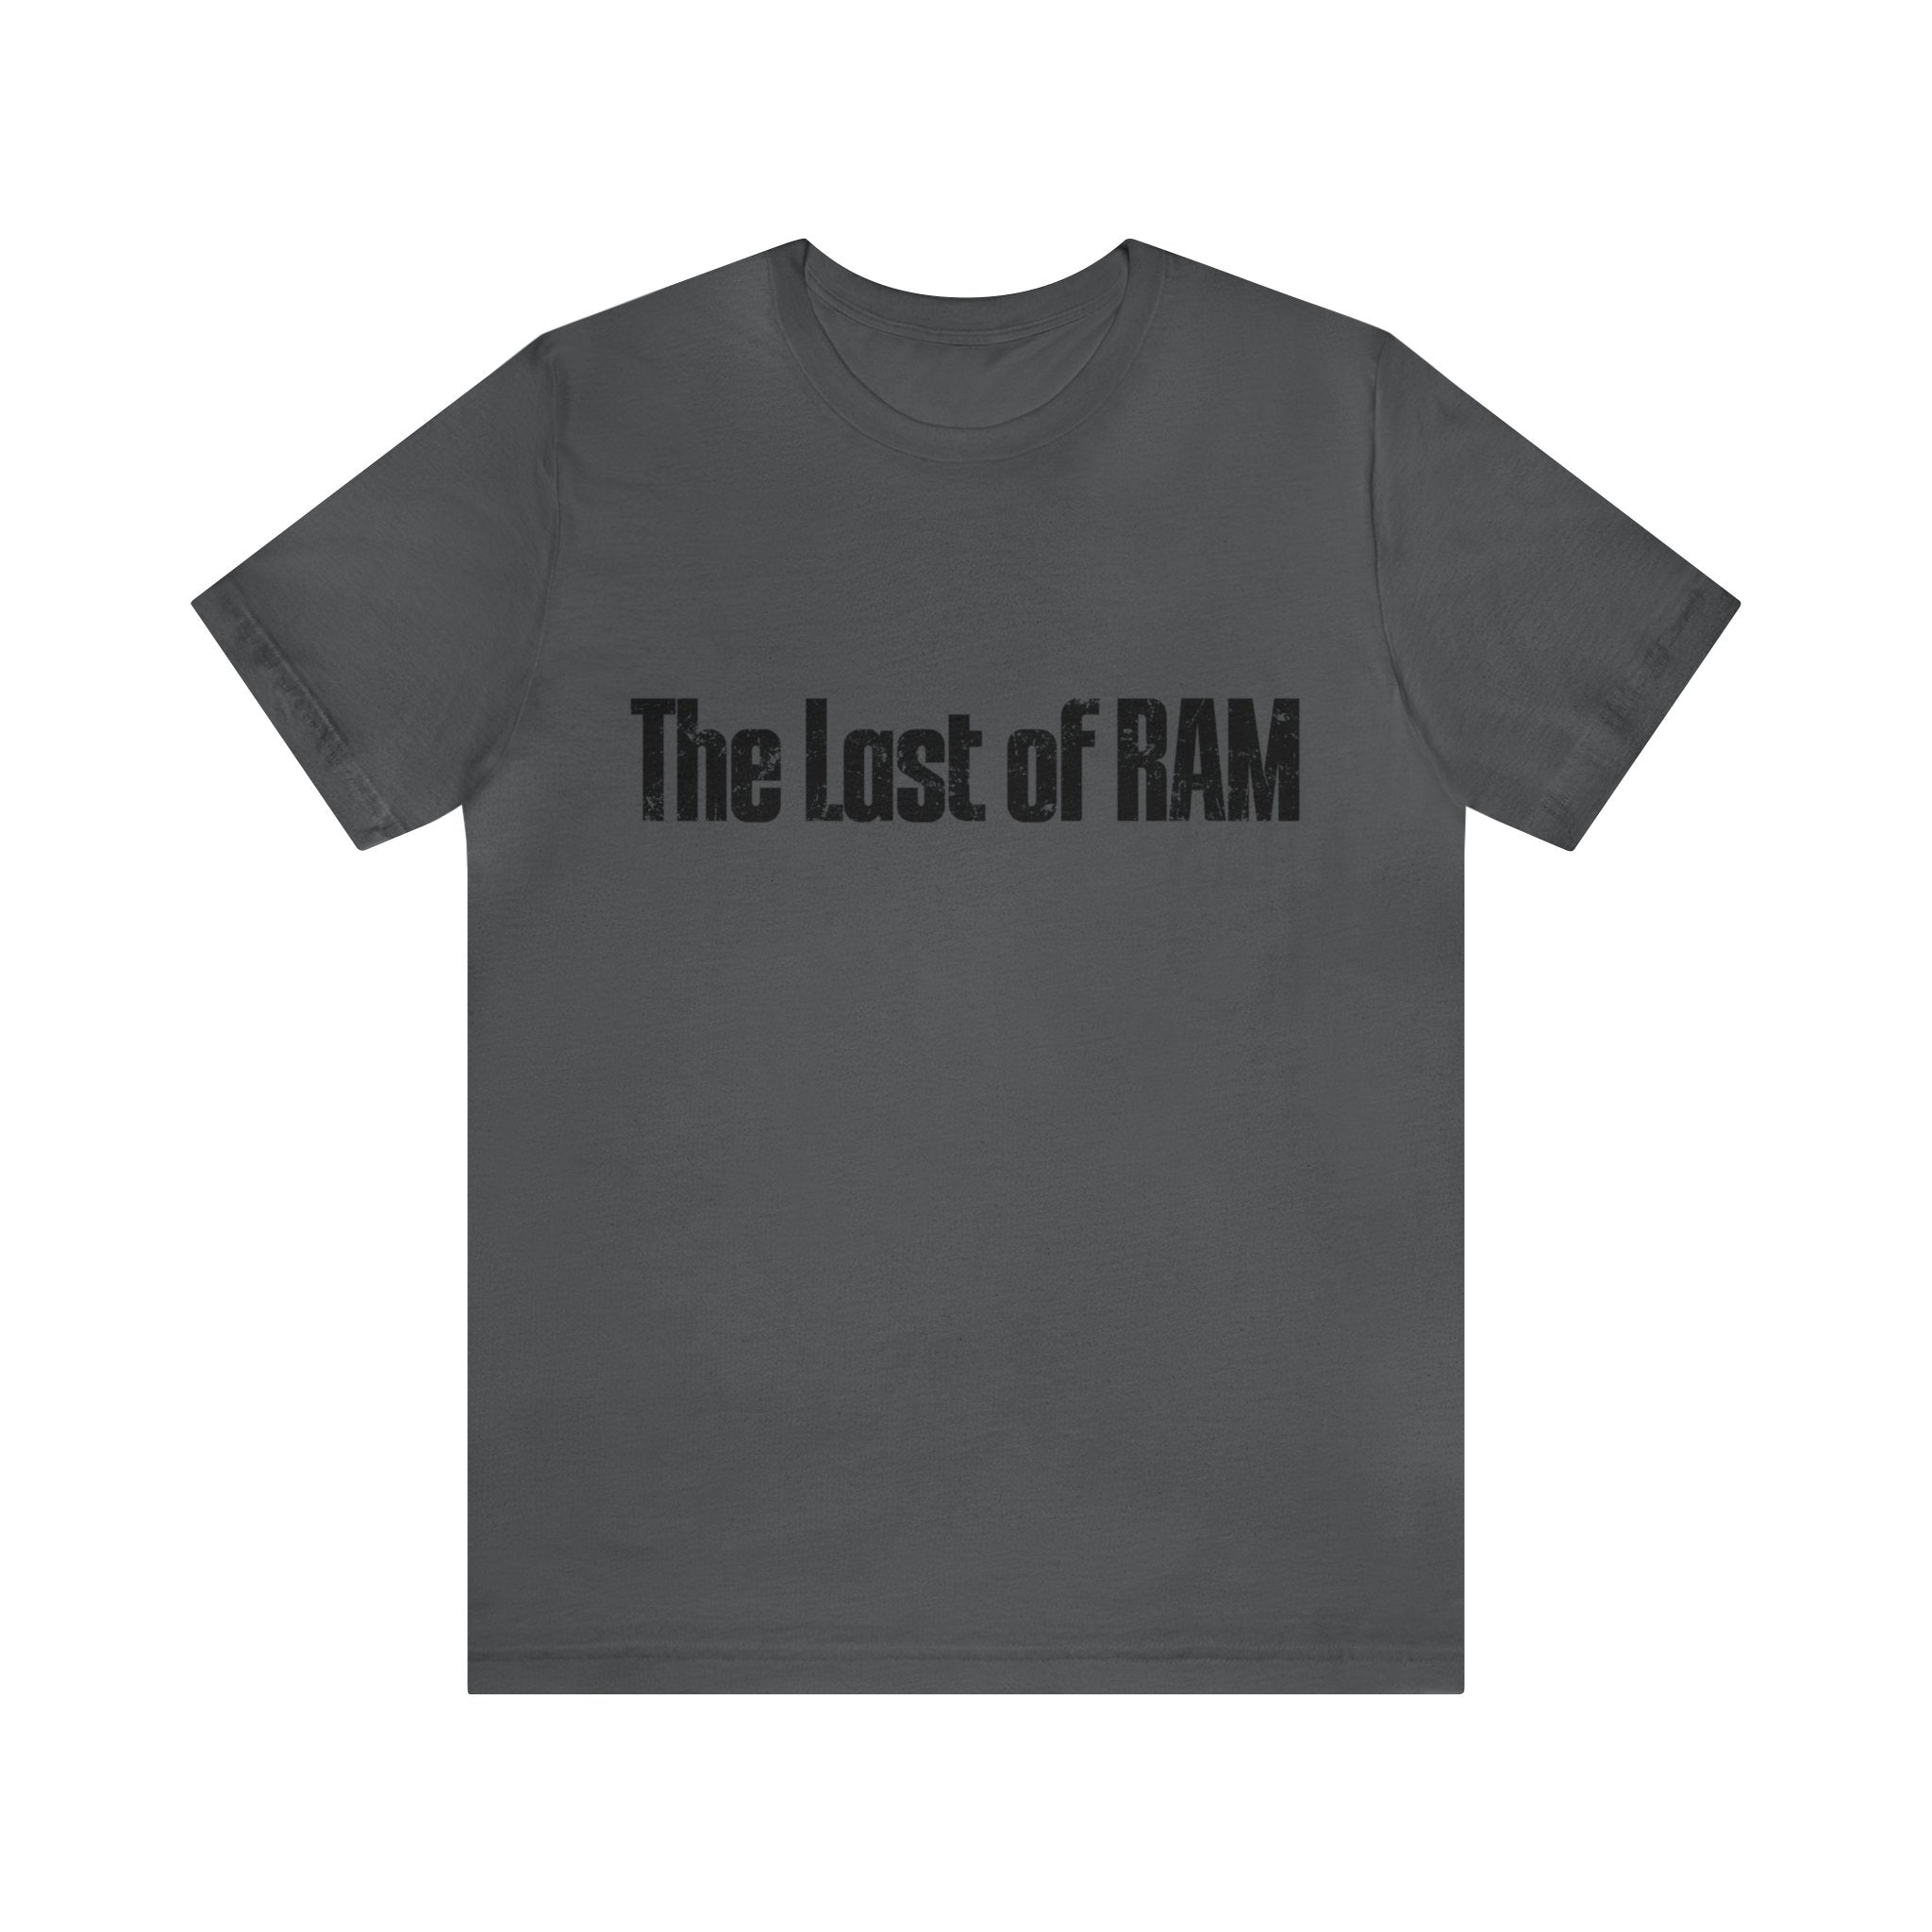 The Last of RAM Tee Shirt